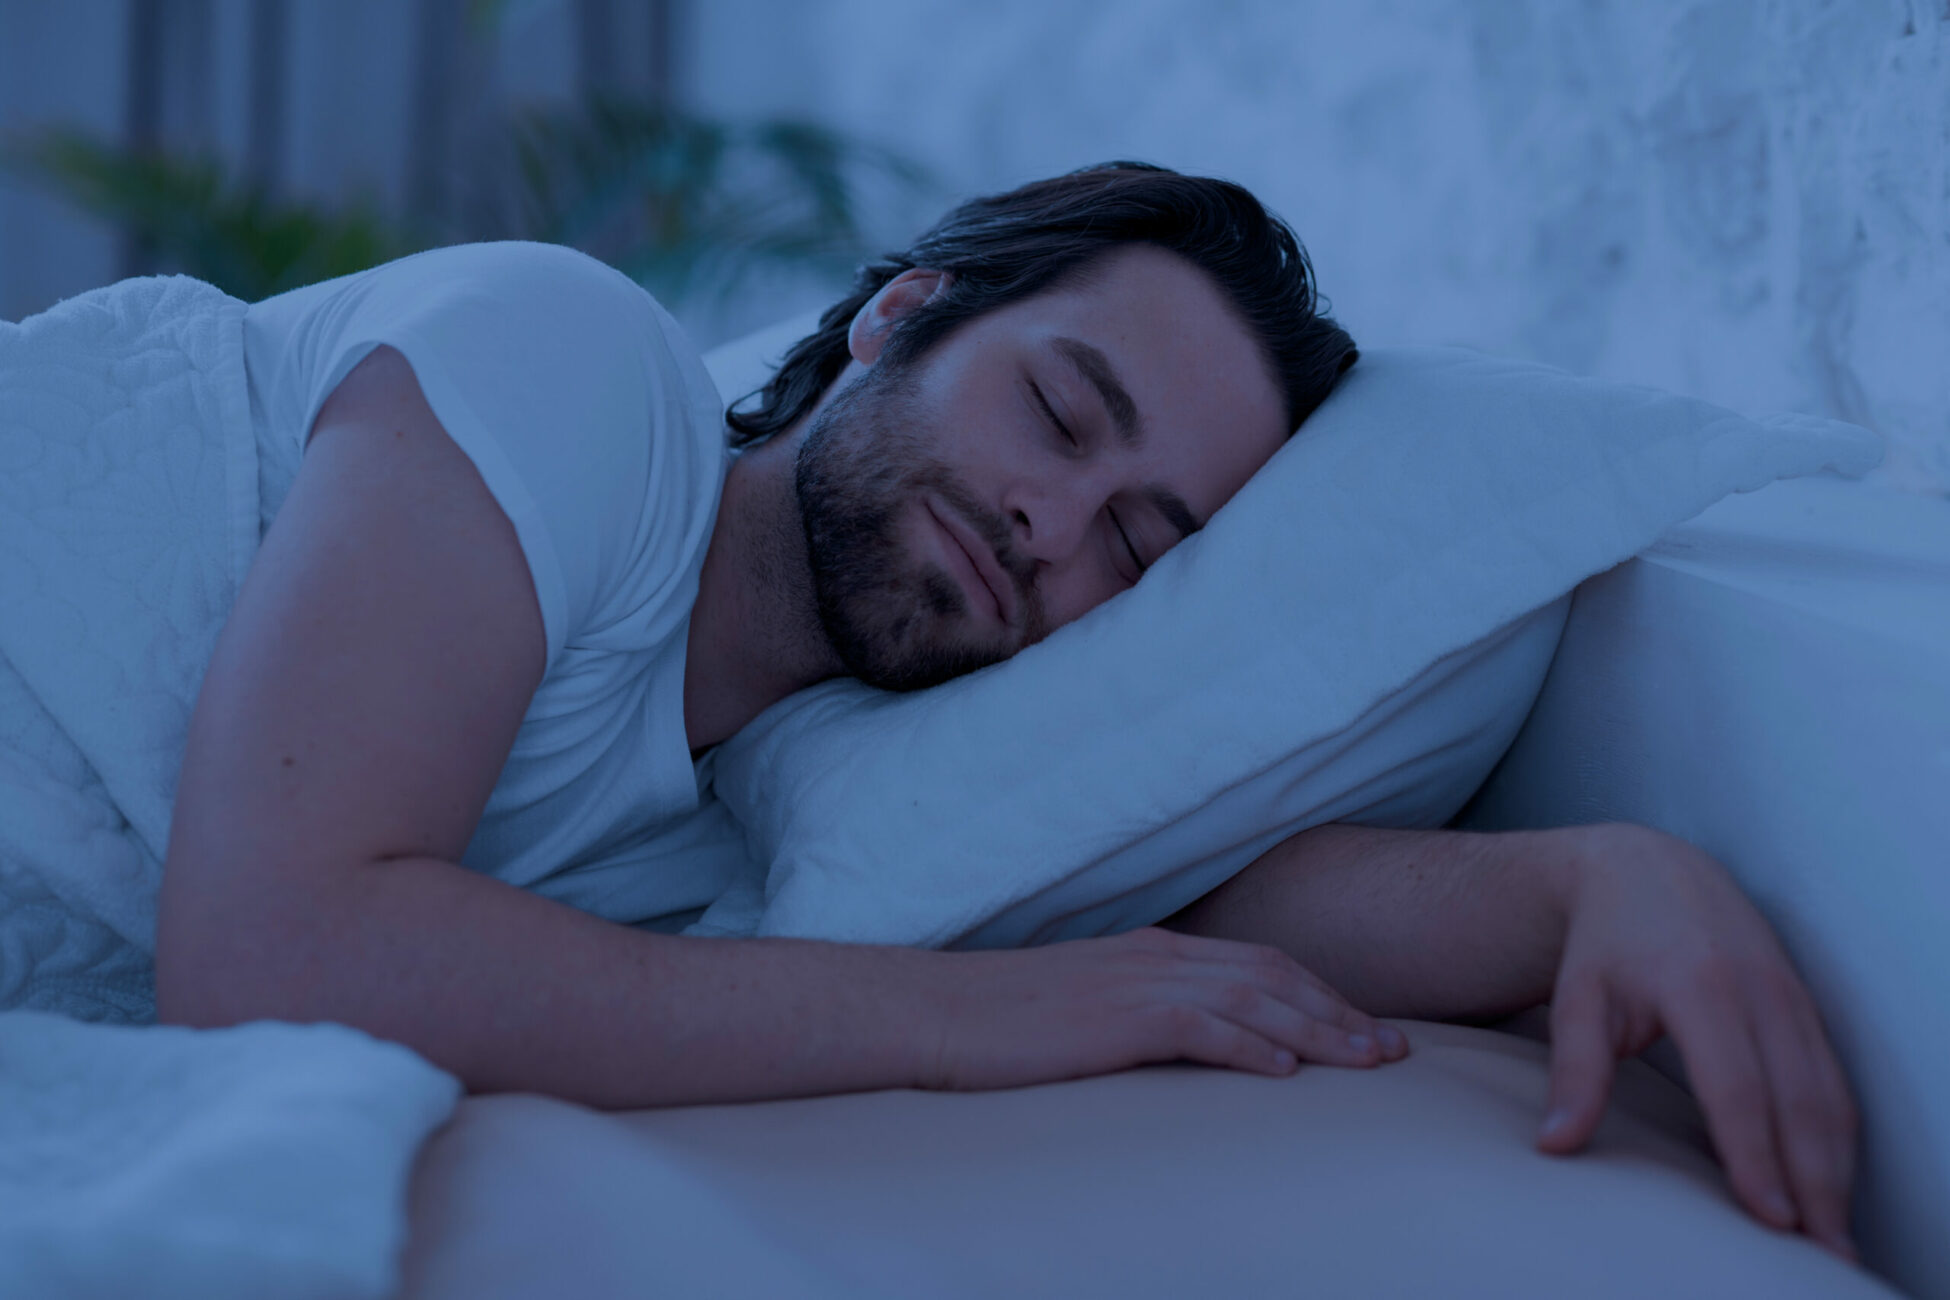 Man sleeping in deep sleep state on white bed